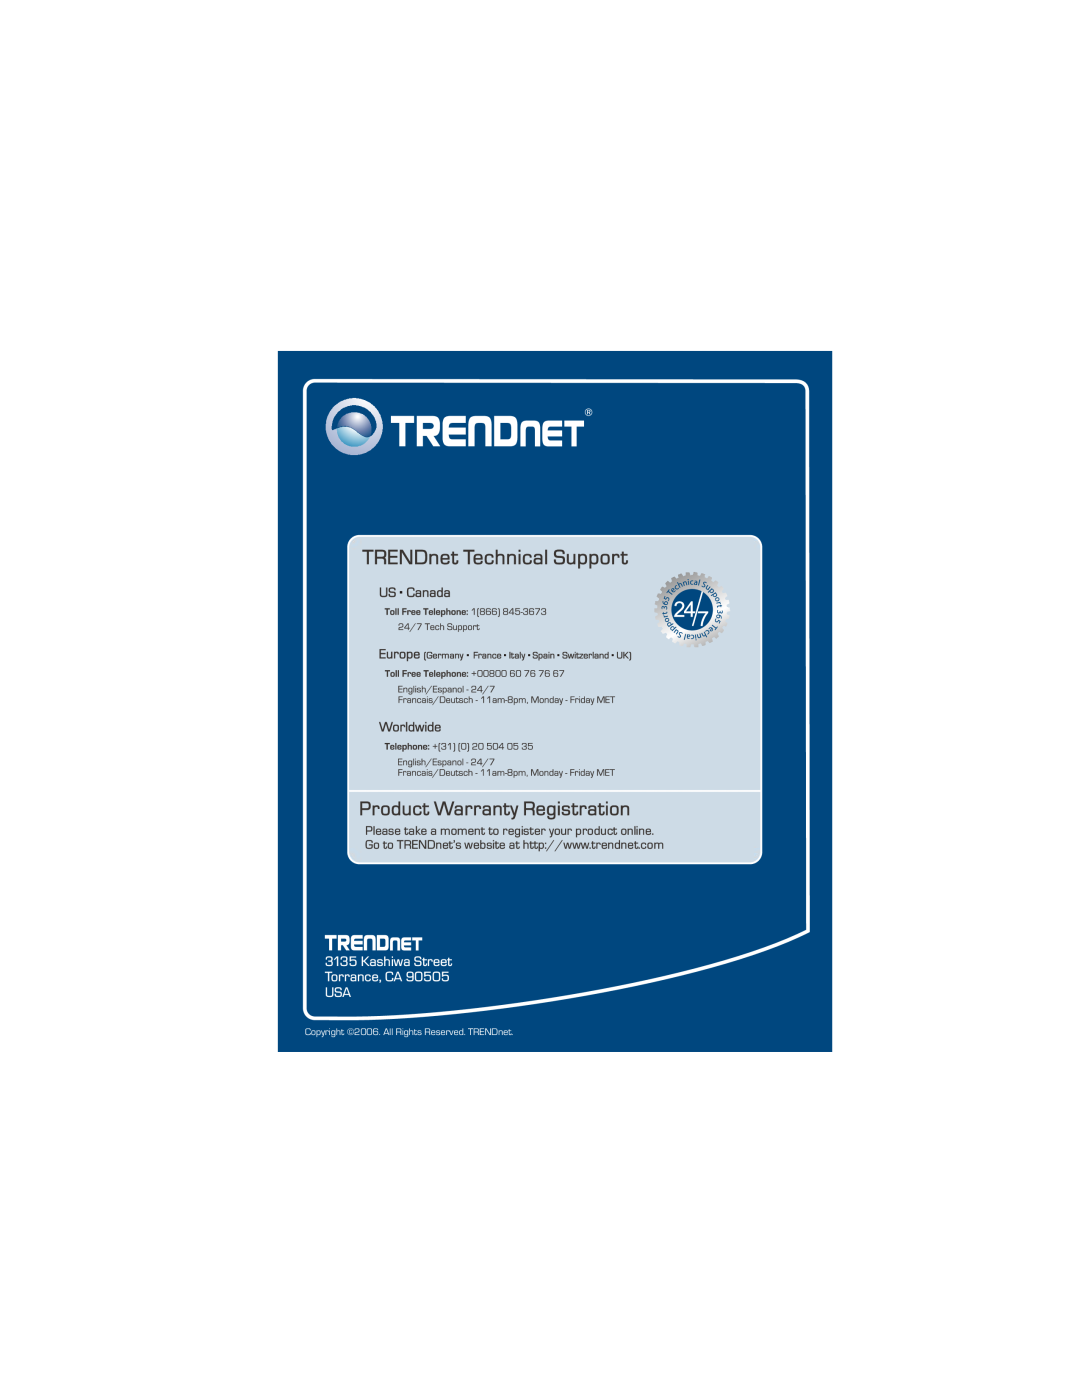 TRENDnet TEWAO08O manual TRENDnet Technical Support, Product Warranty Registration, Kashiwa Street Torrance, CA USA 